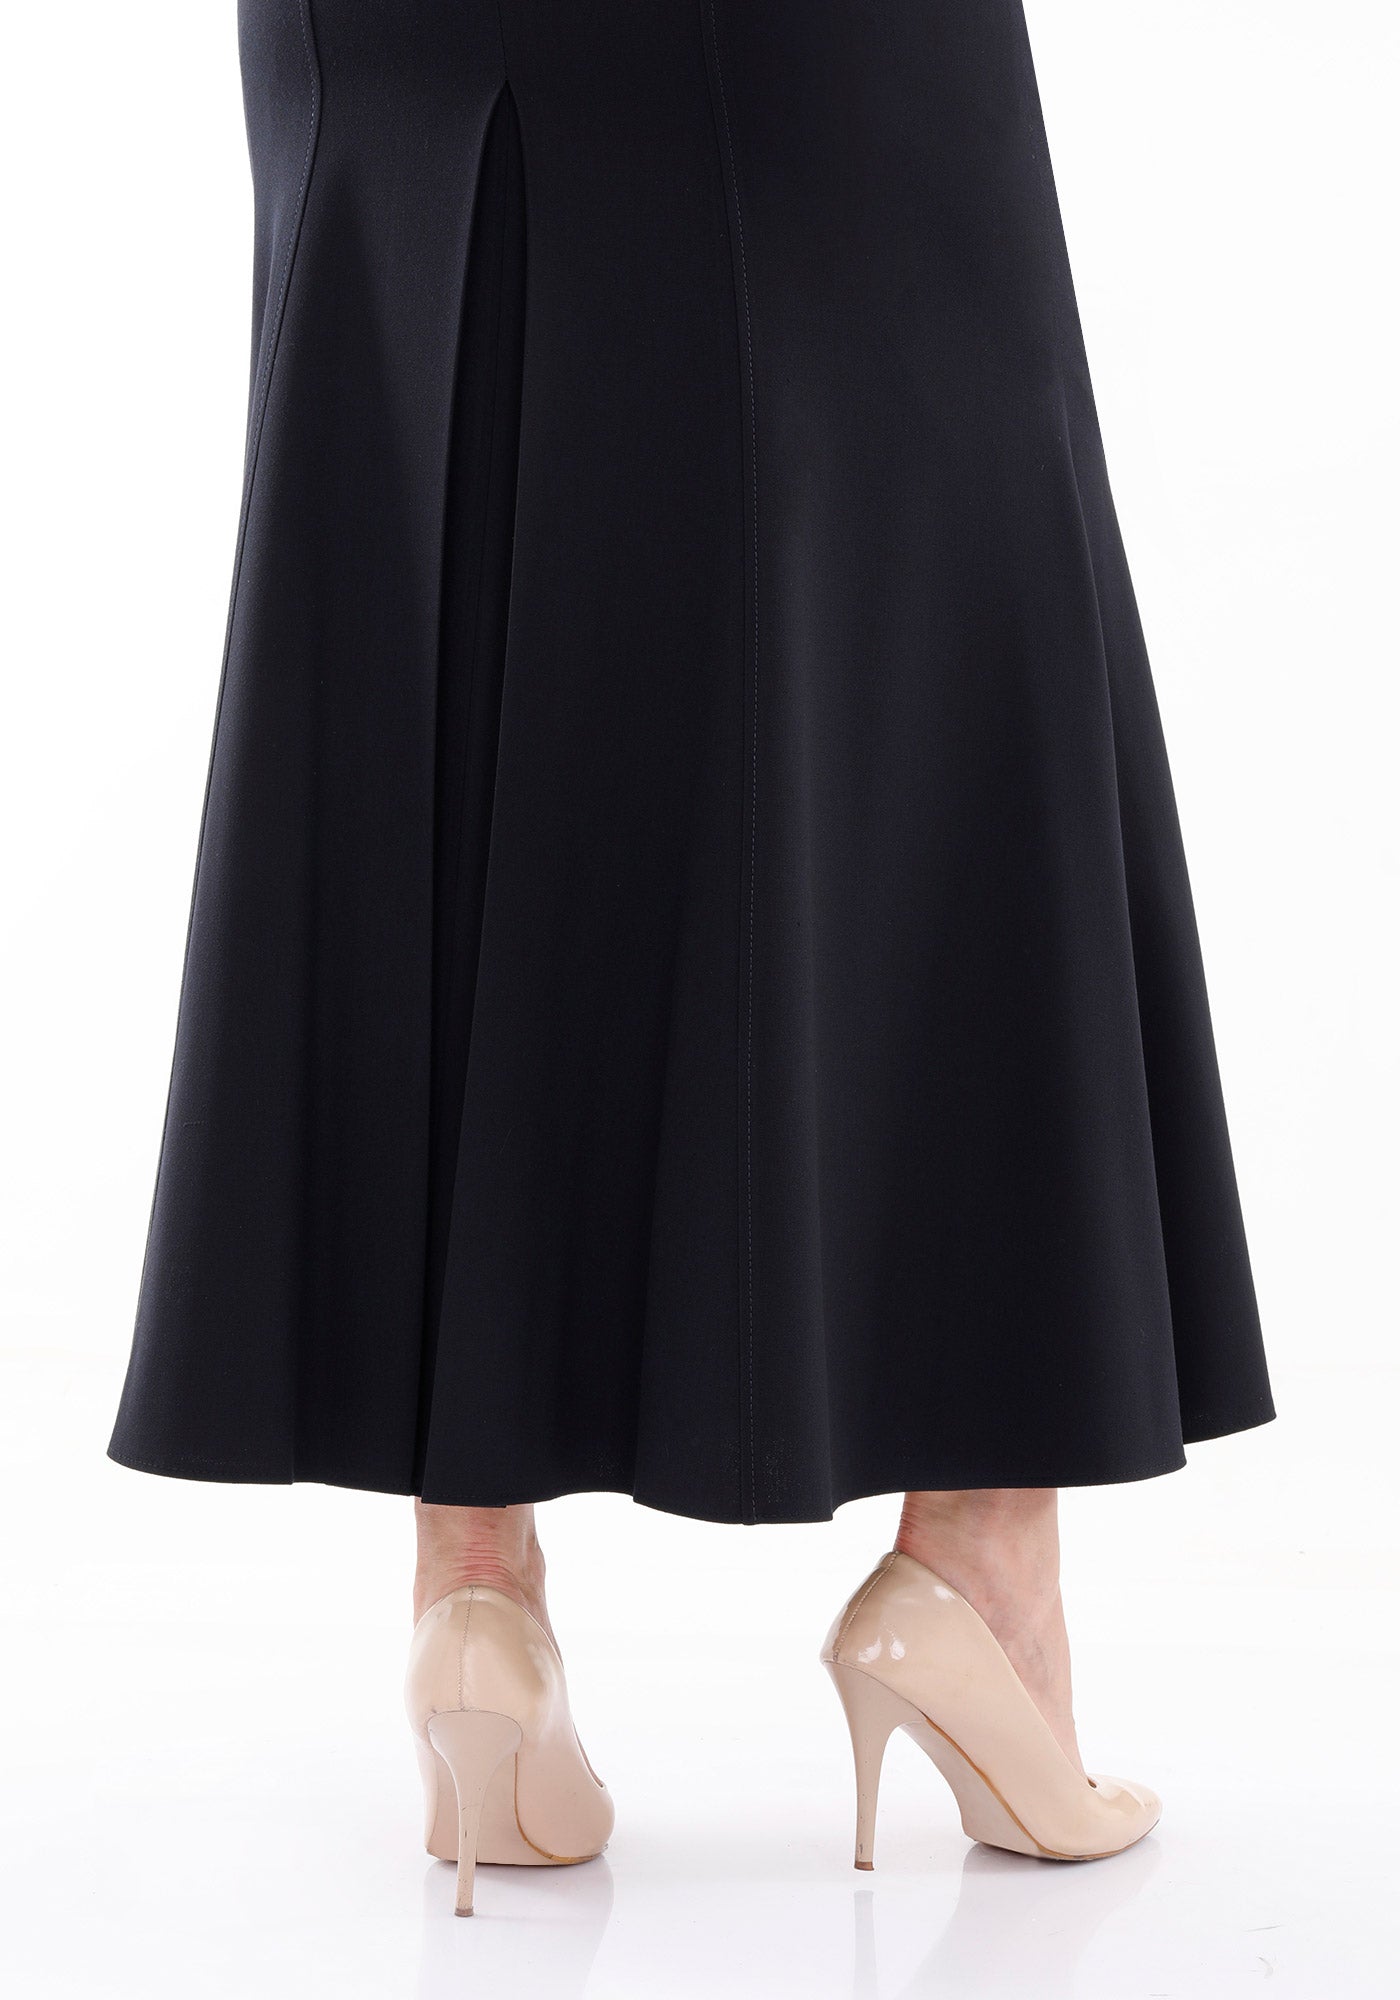 Modest Plus Size Mermaid Maxi Skirts | Fishtail Long Skirts G-Line